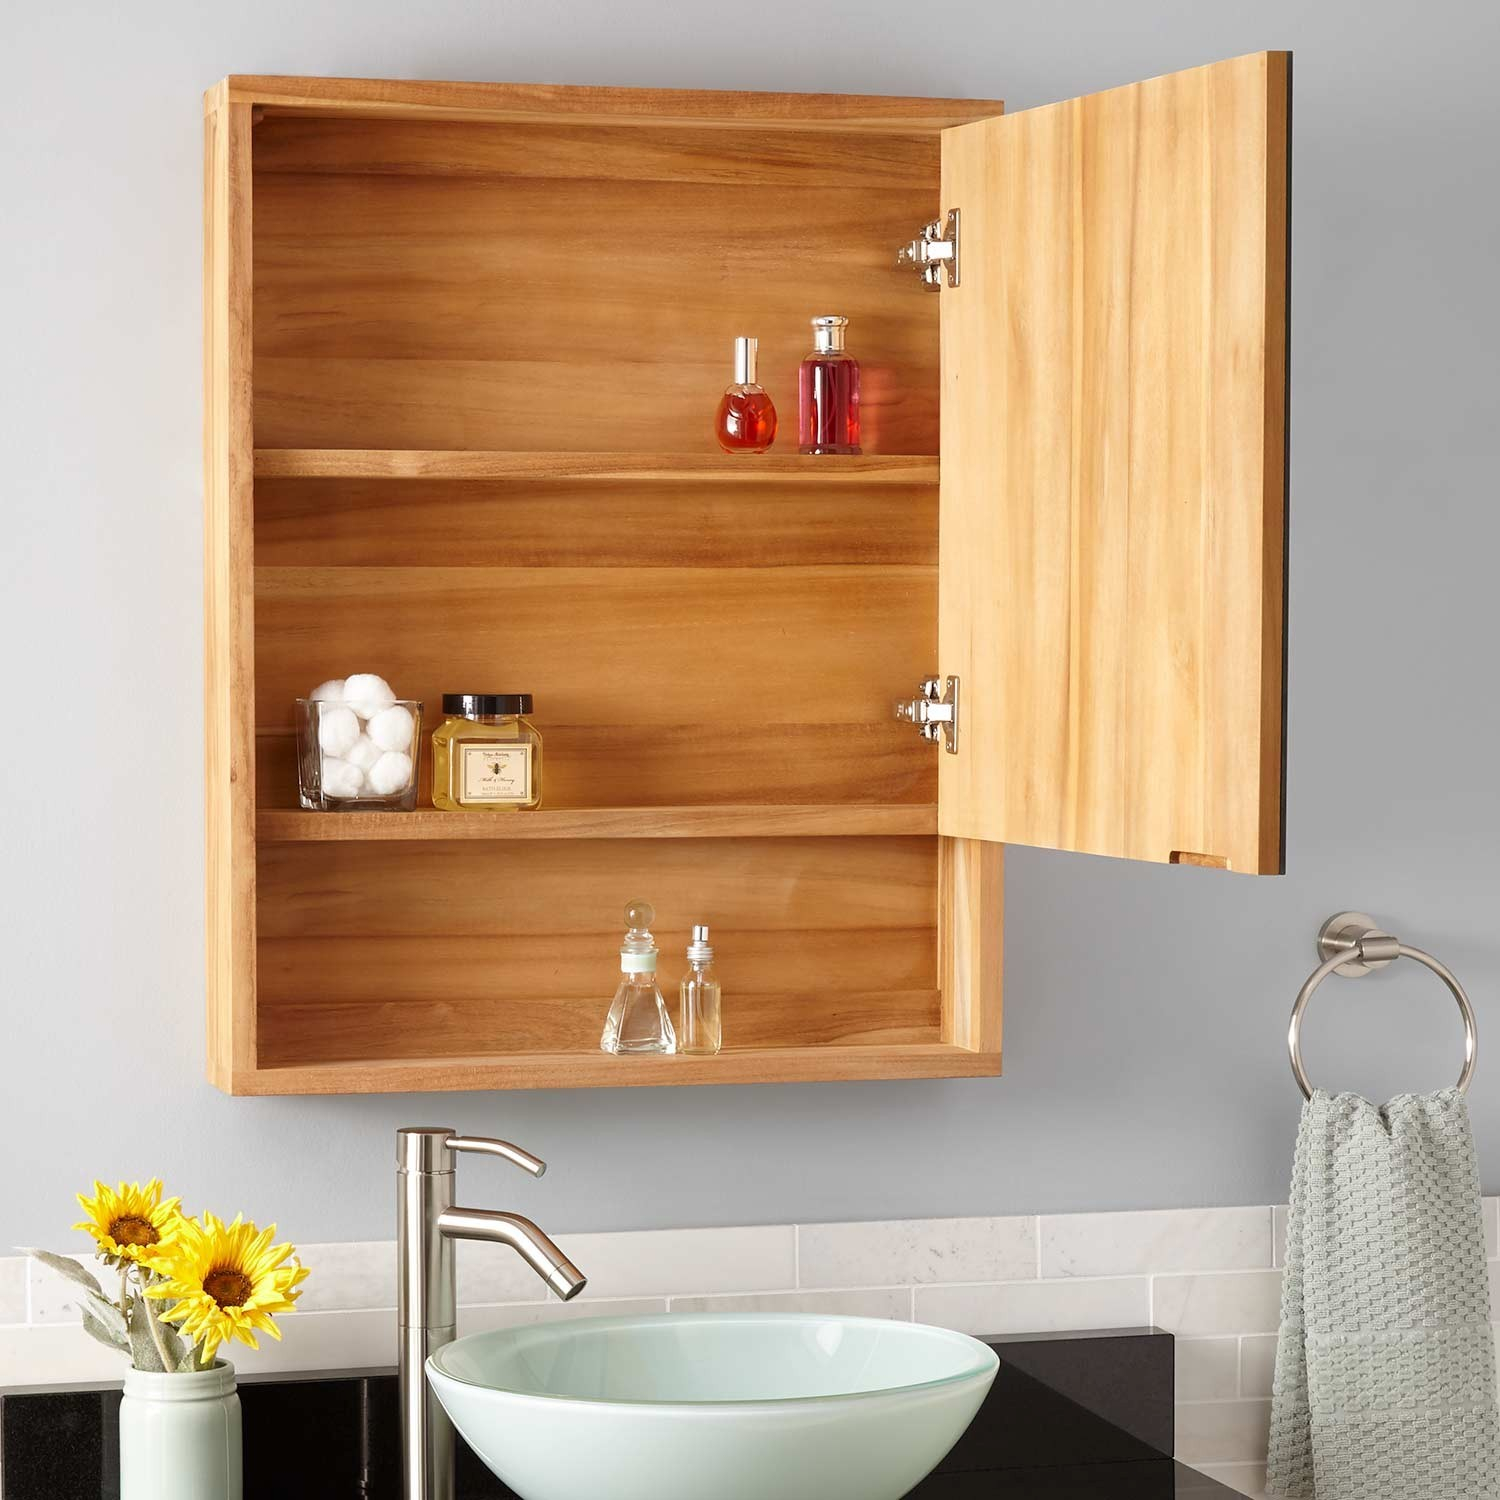 Amazing Teak Bathroom Cabinet Inspiration Bathroom Design Ideas within measurements 1500 X 1500